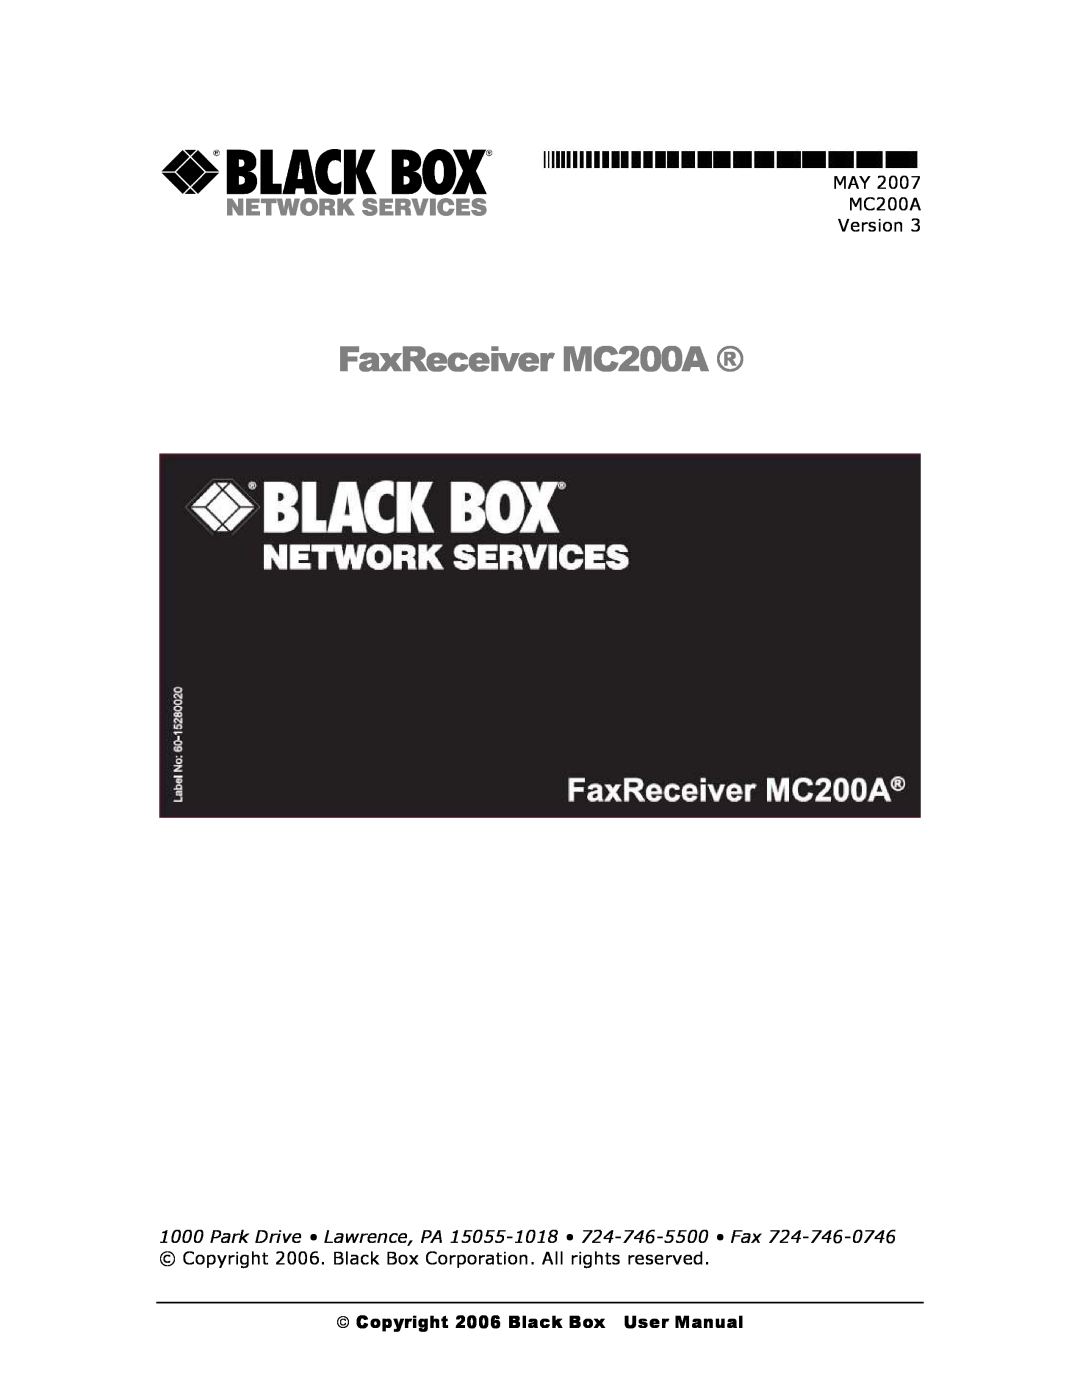 Black Box Black Box Network Services FaxReceiver user manual FaxReceiver MC200A,  Copyright 2006 Black Box User Manual 